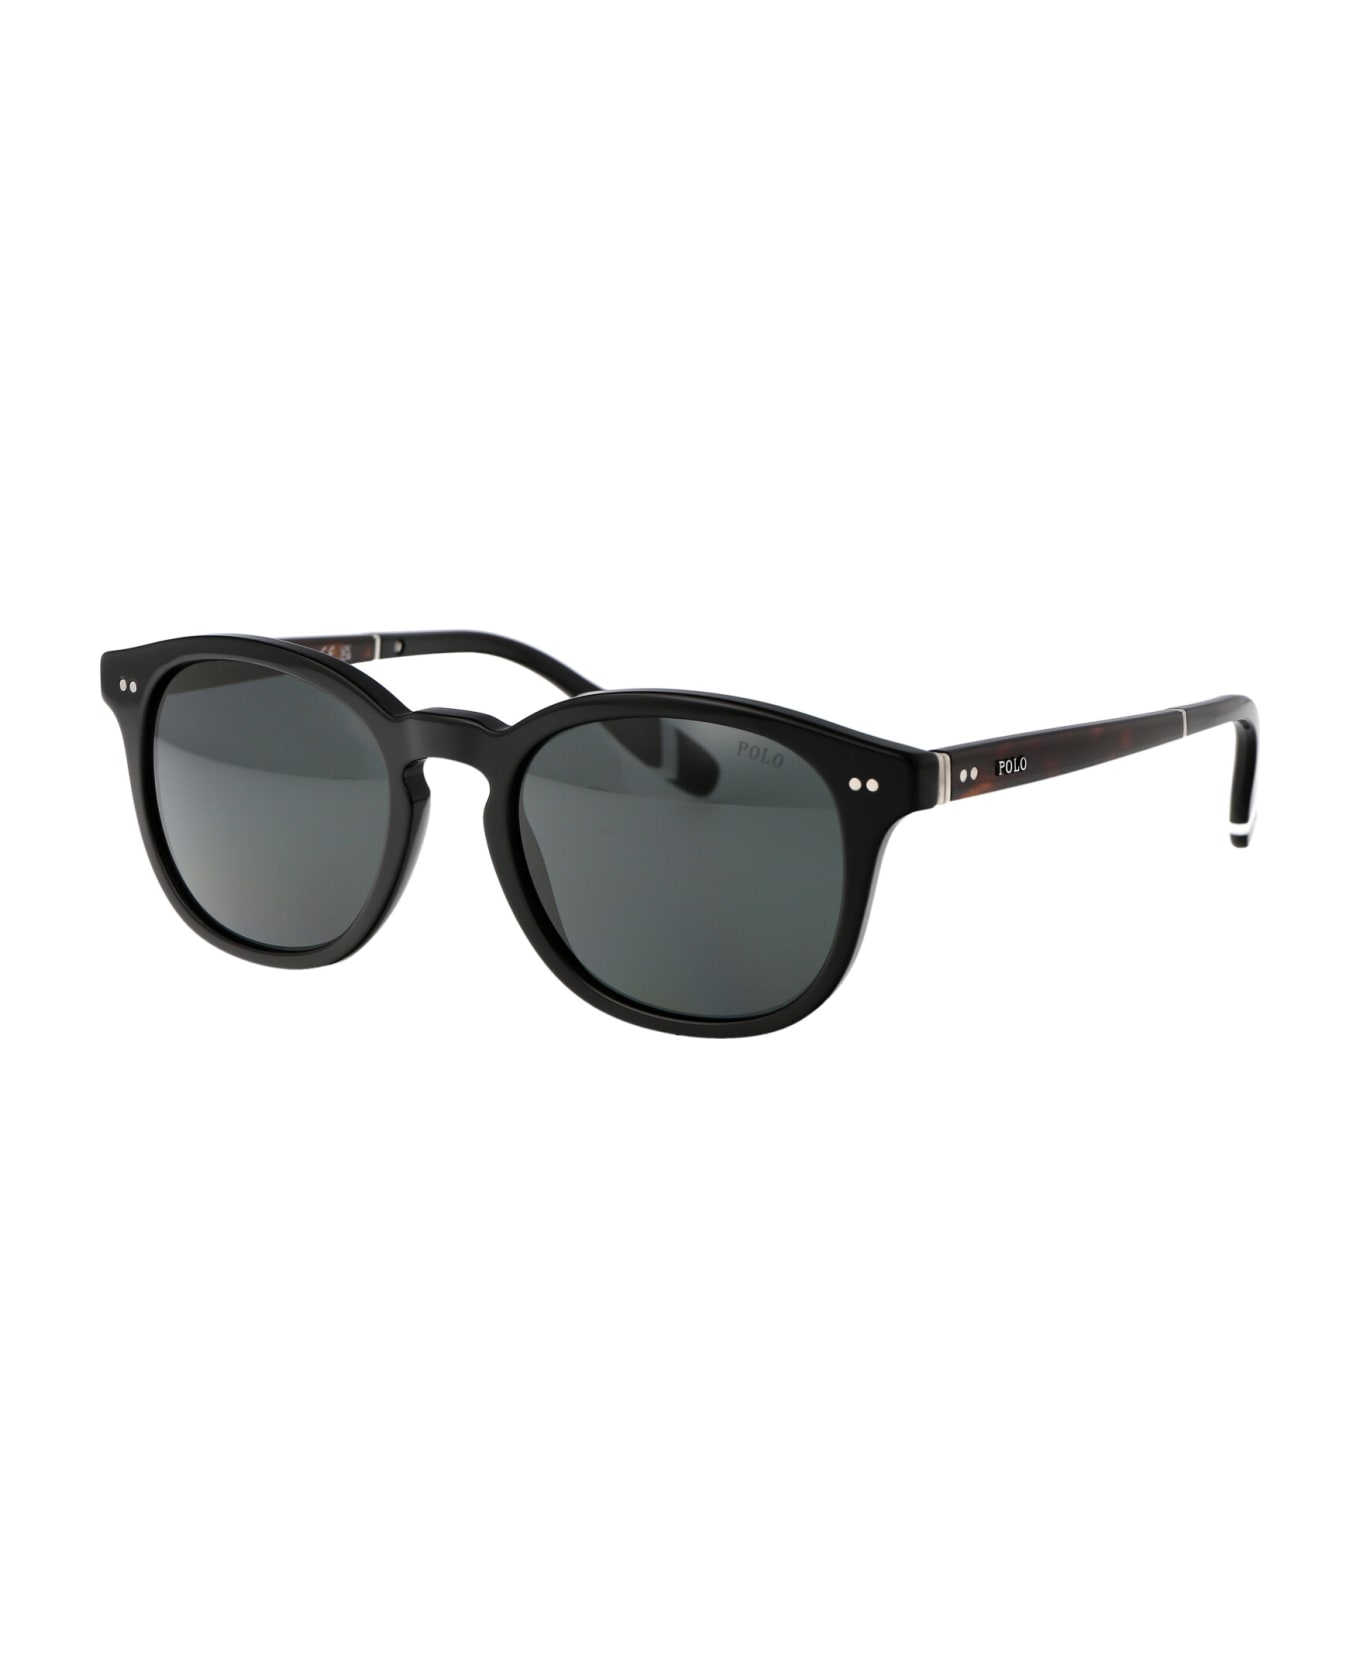 Polo Ralph Lauren 0ph4206 Sunglasses - 500187 SHINY BLACK サングラス